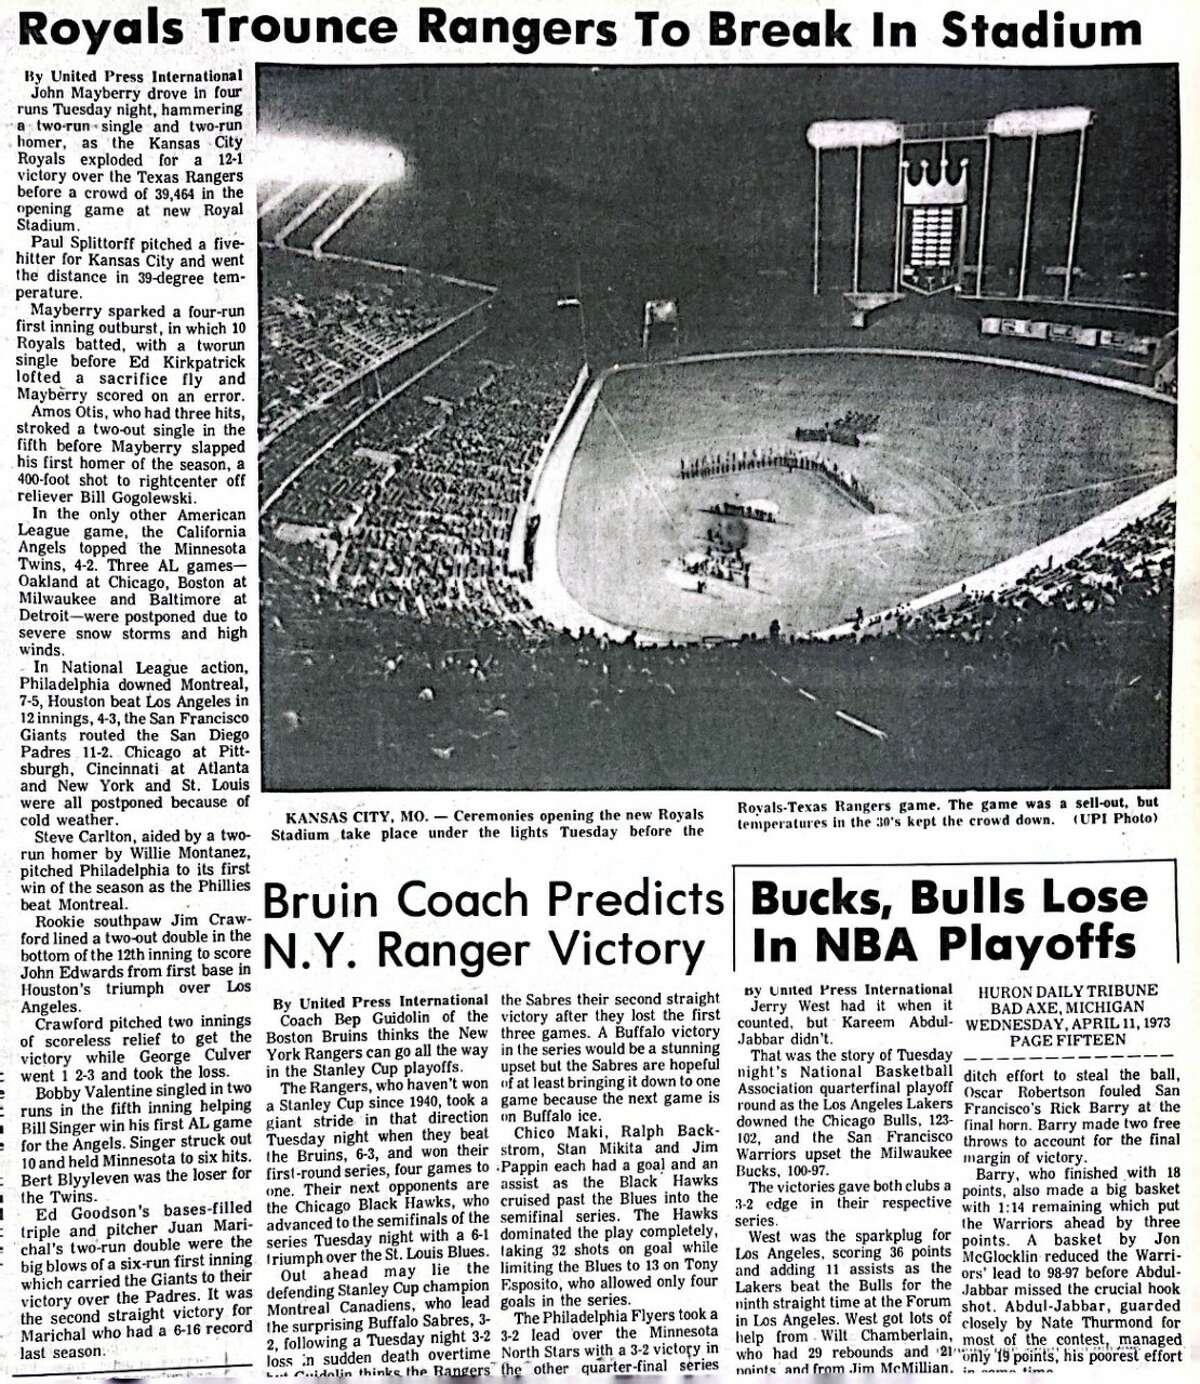 The Kansas City Royals break in Kauffman Stadium in spring 1973.